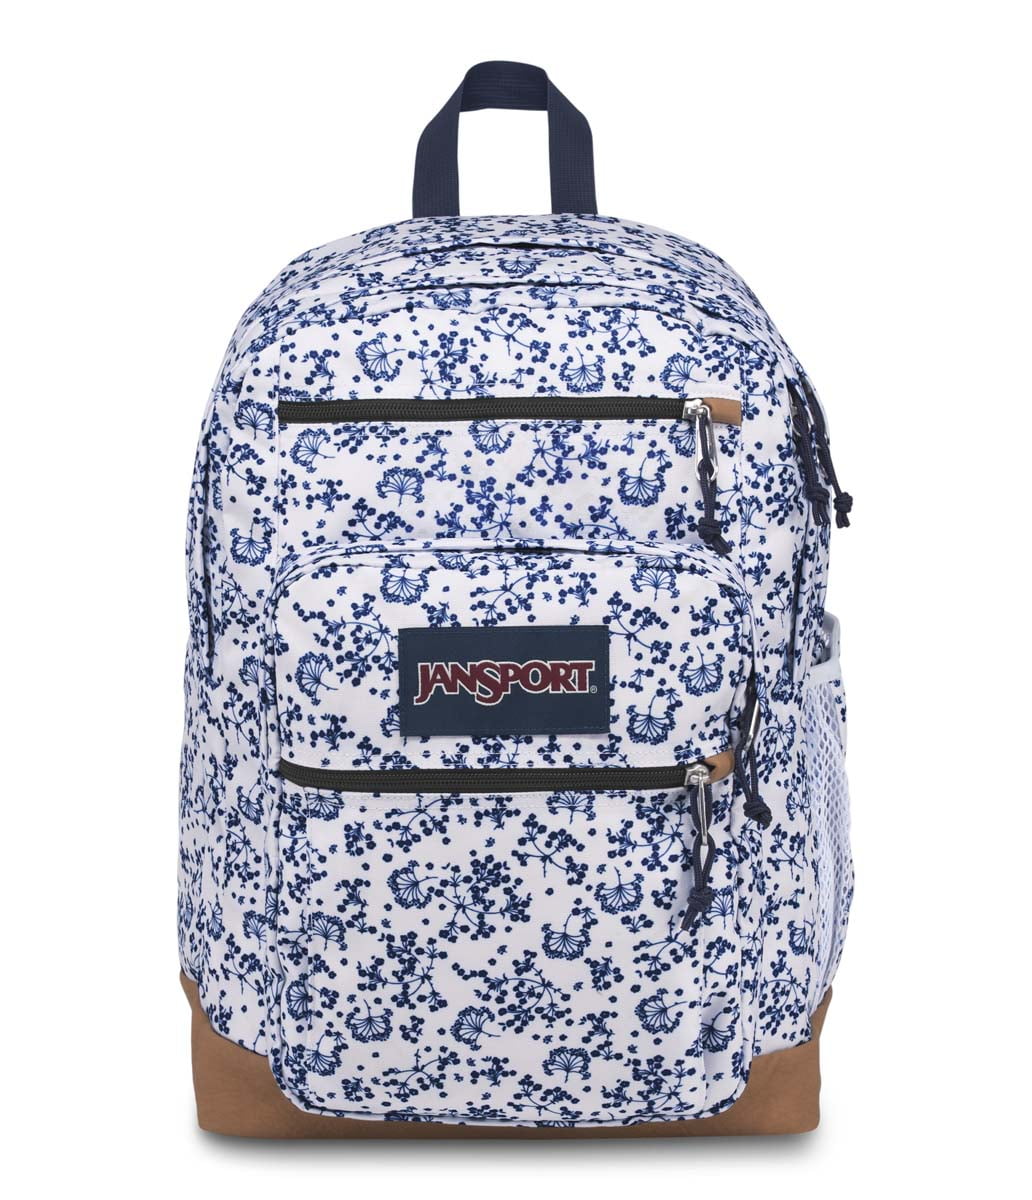 white field floral jansport backpack